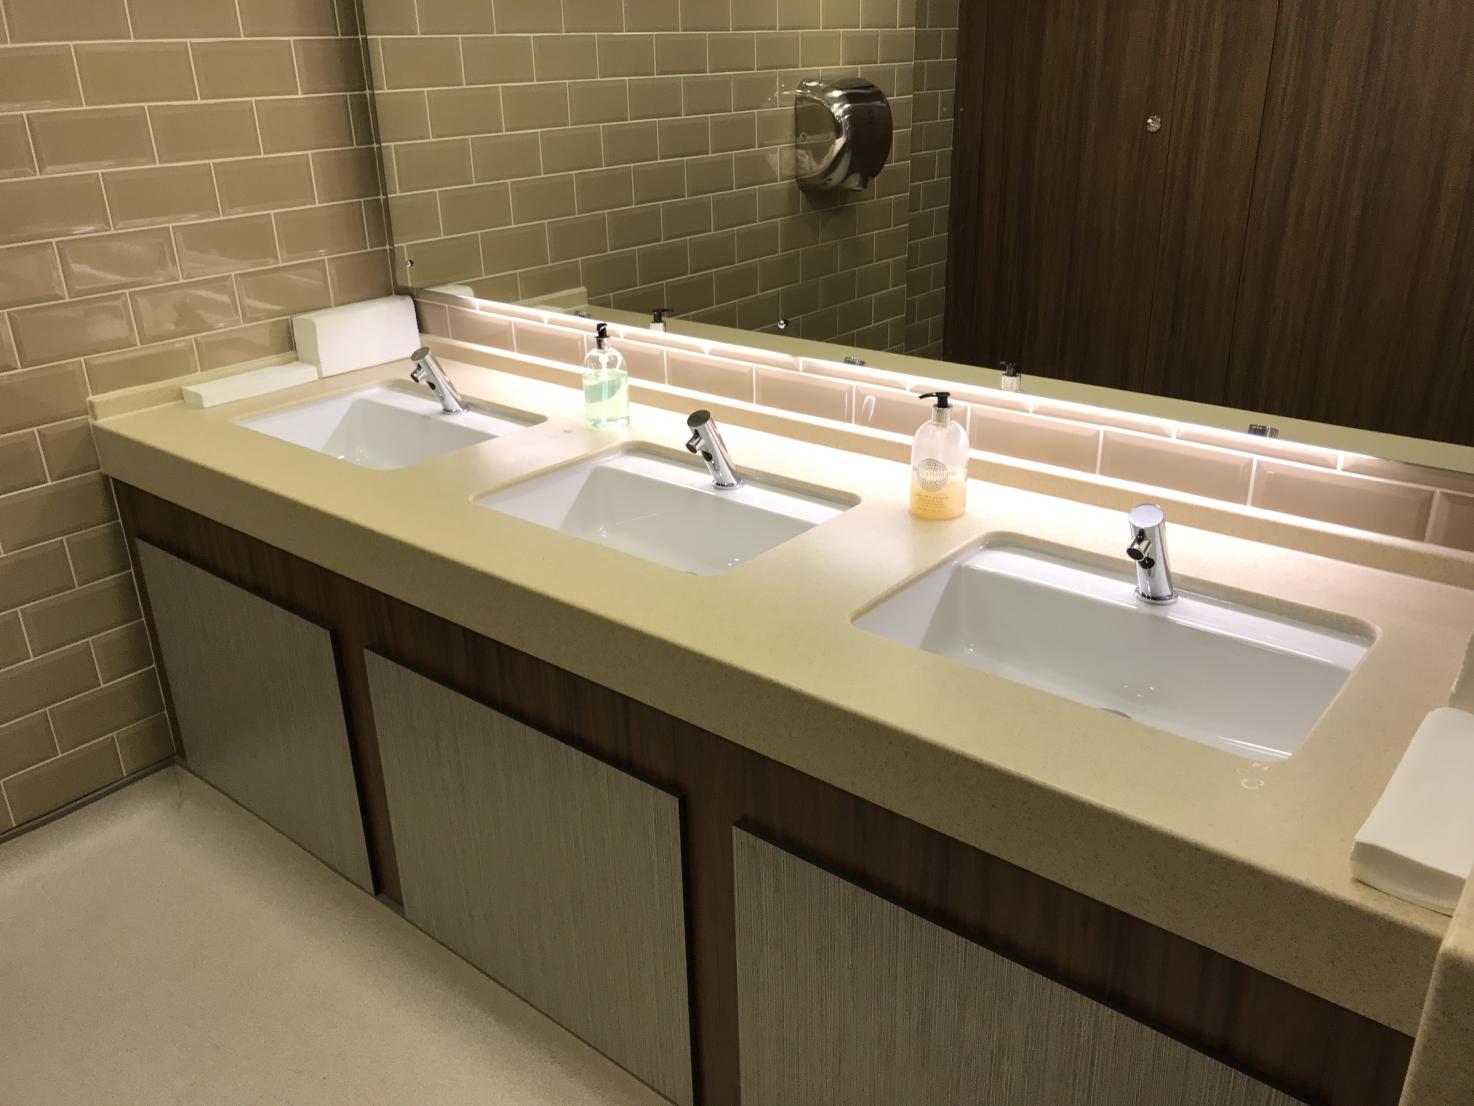 HI-MACS Almond Pearl bathroom worktop